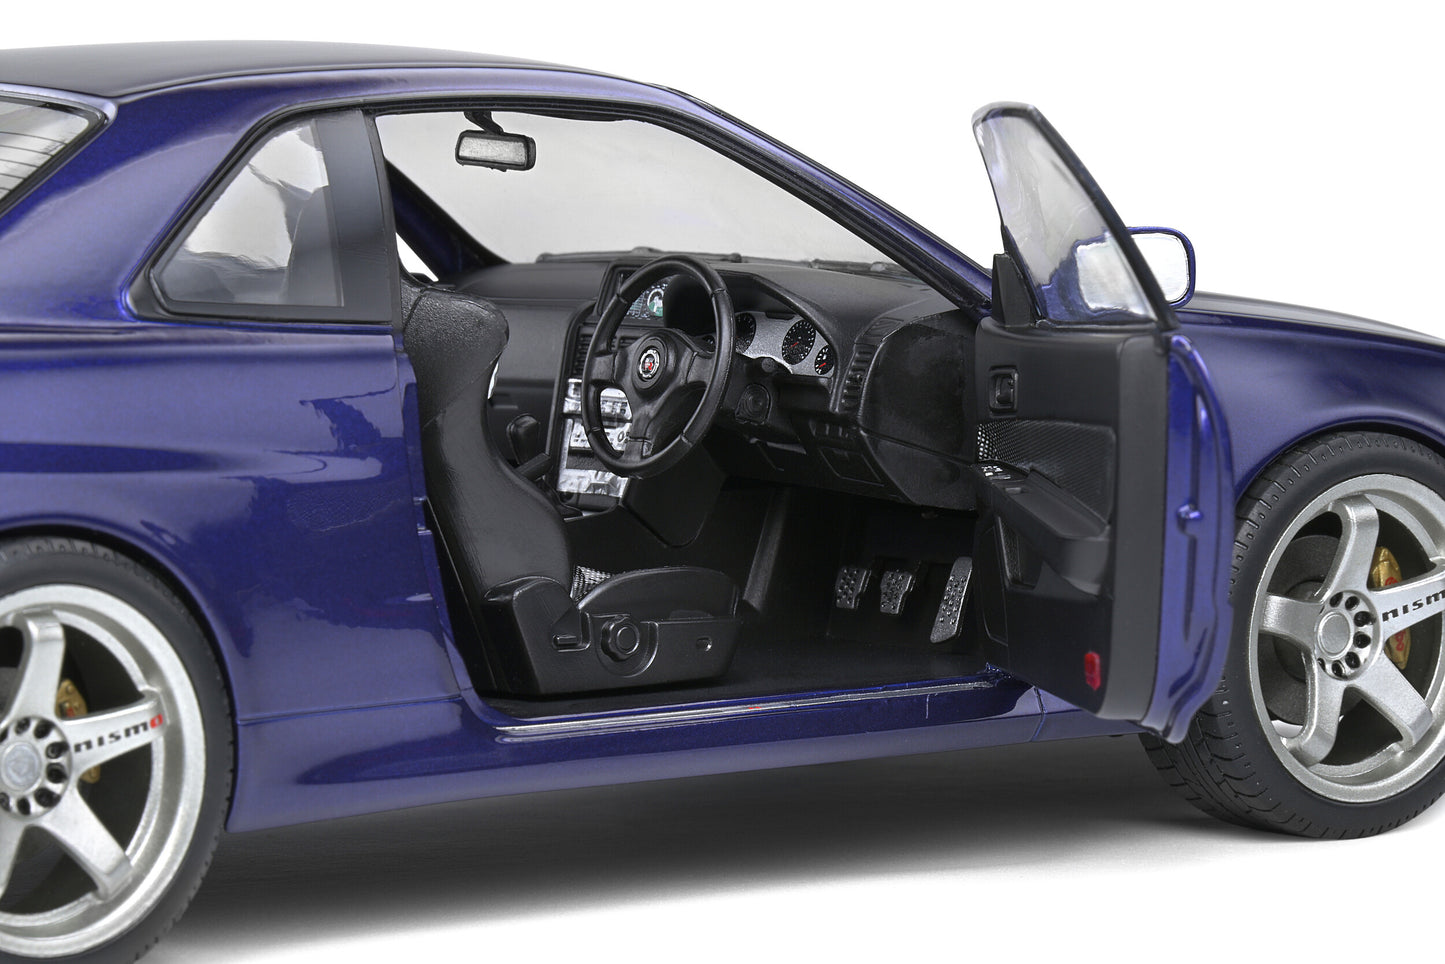 Solido - Nissan Skyline GT-R (R34) (Midnight Purple) 1:18 Scale Model Car